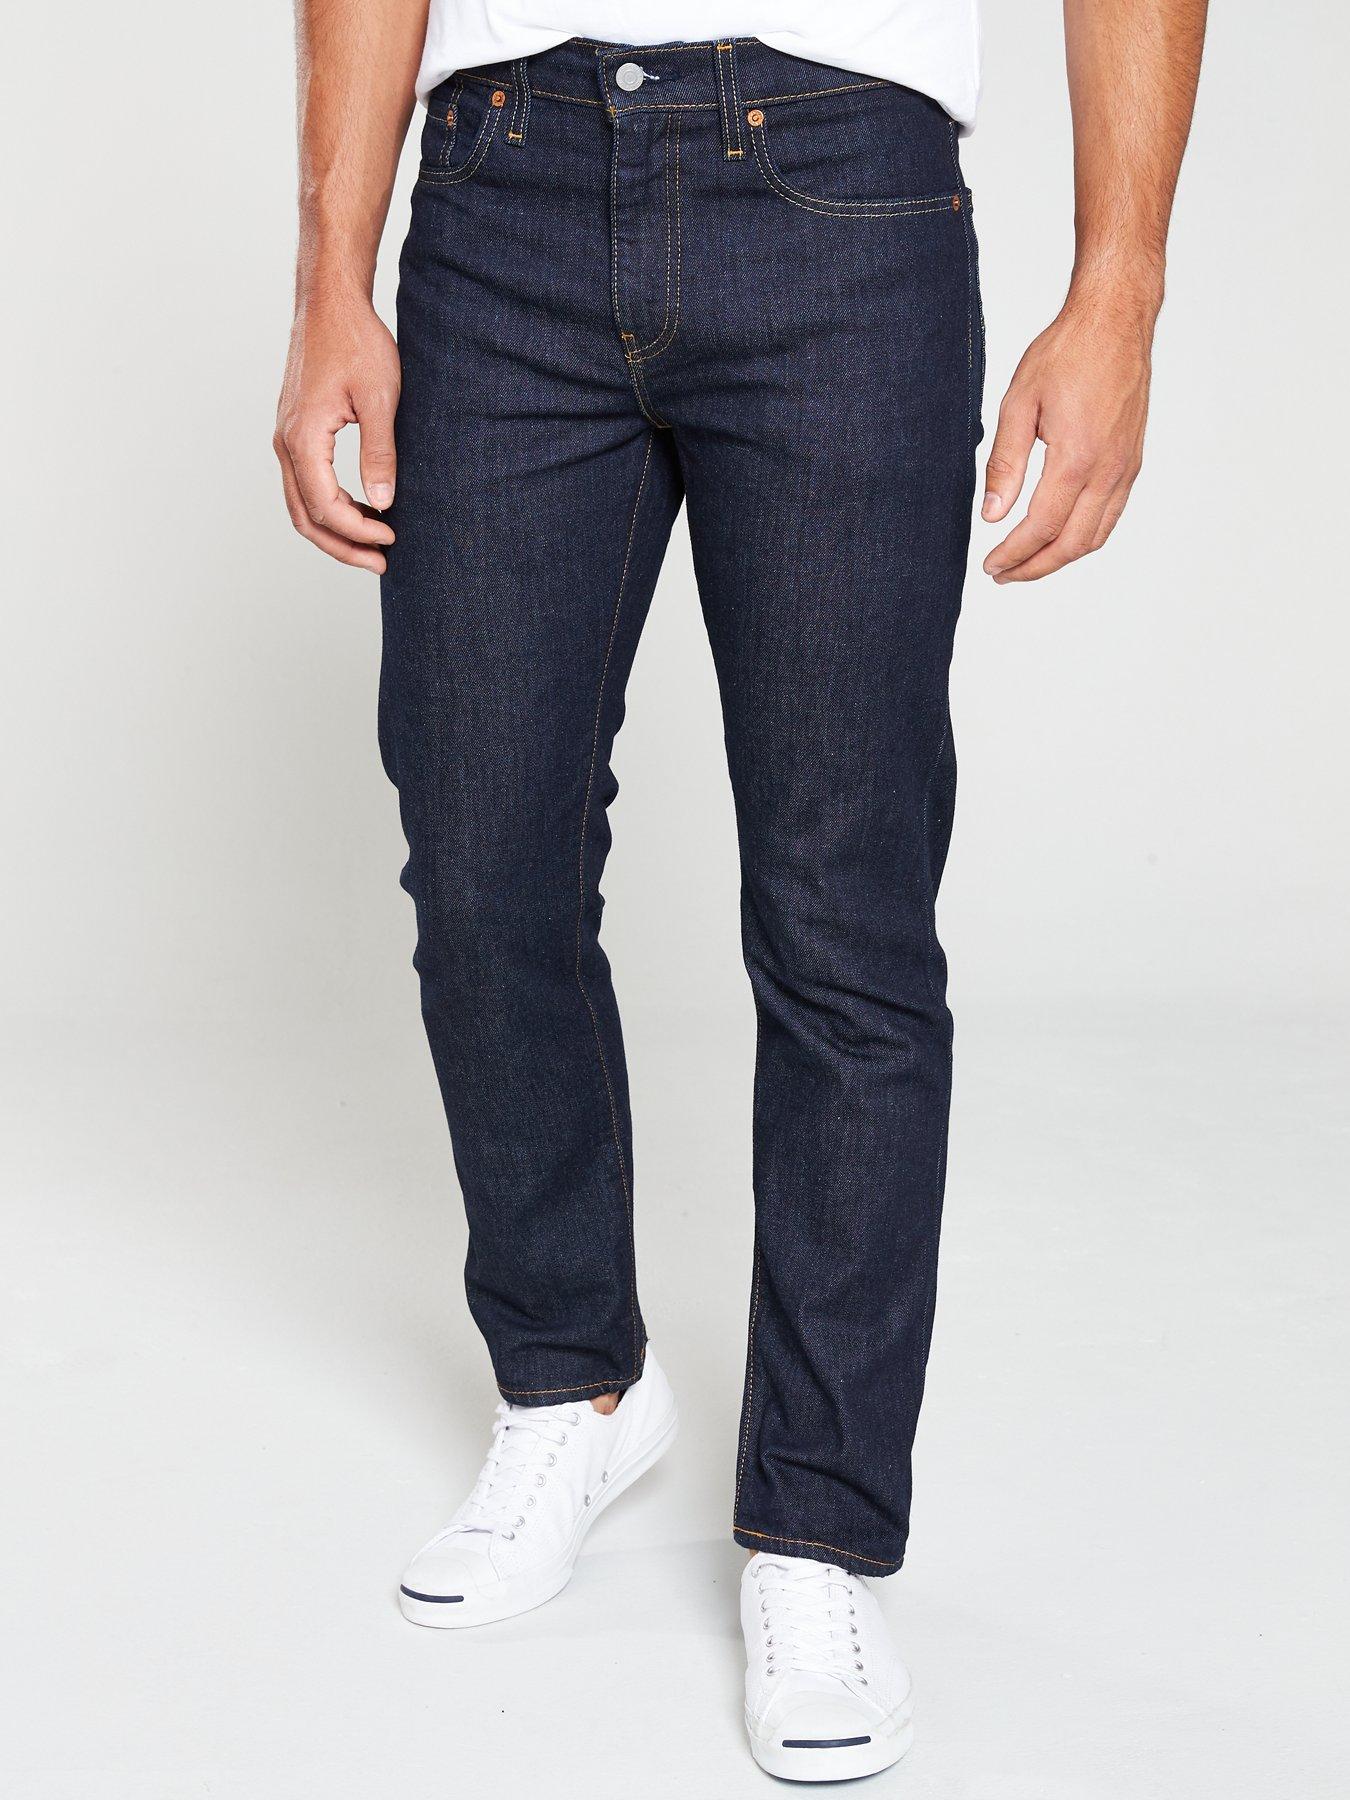 levi's men's 502 regular taper fit jeans